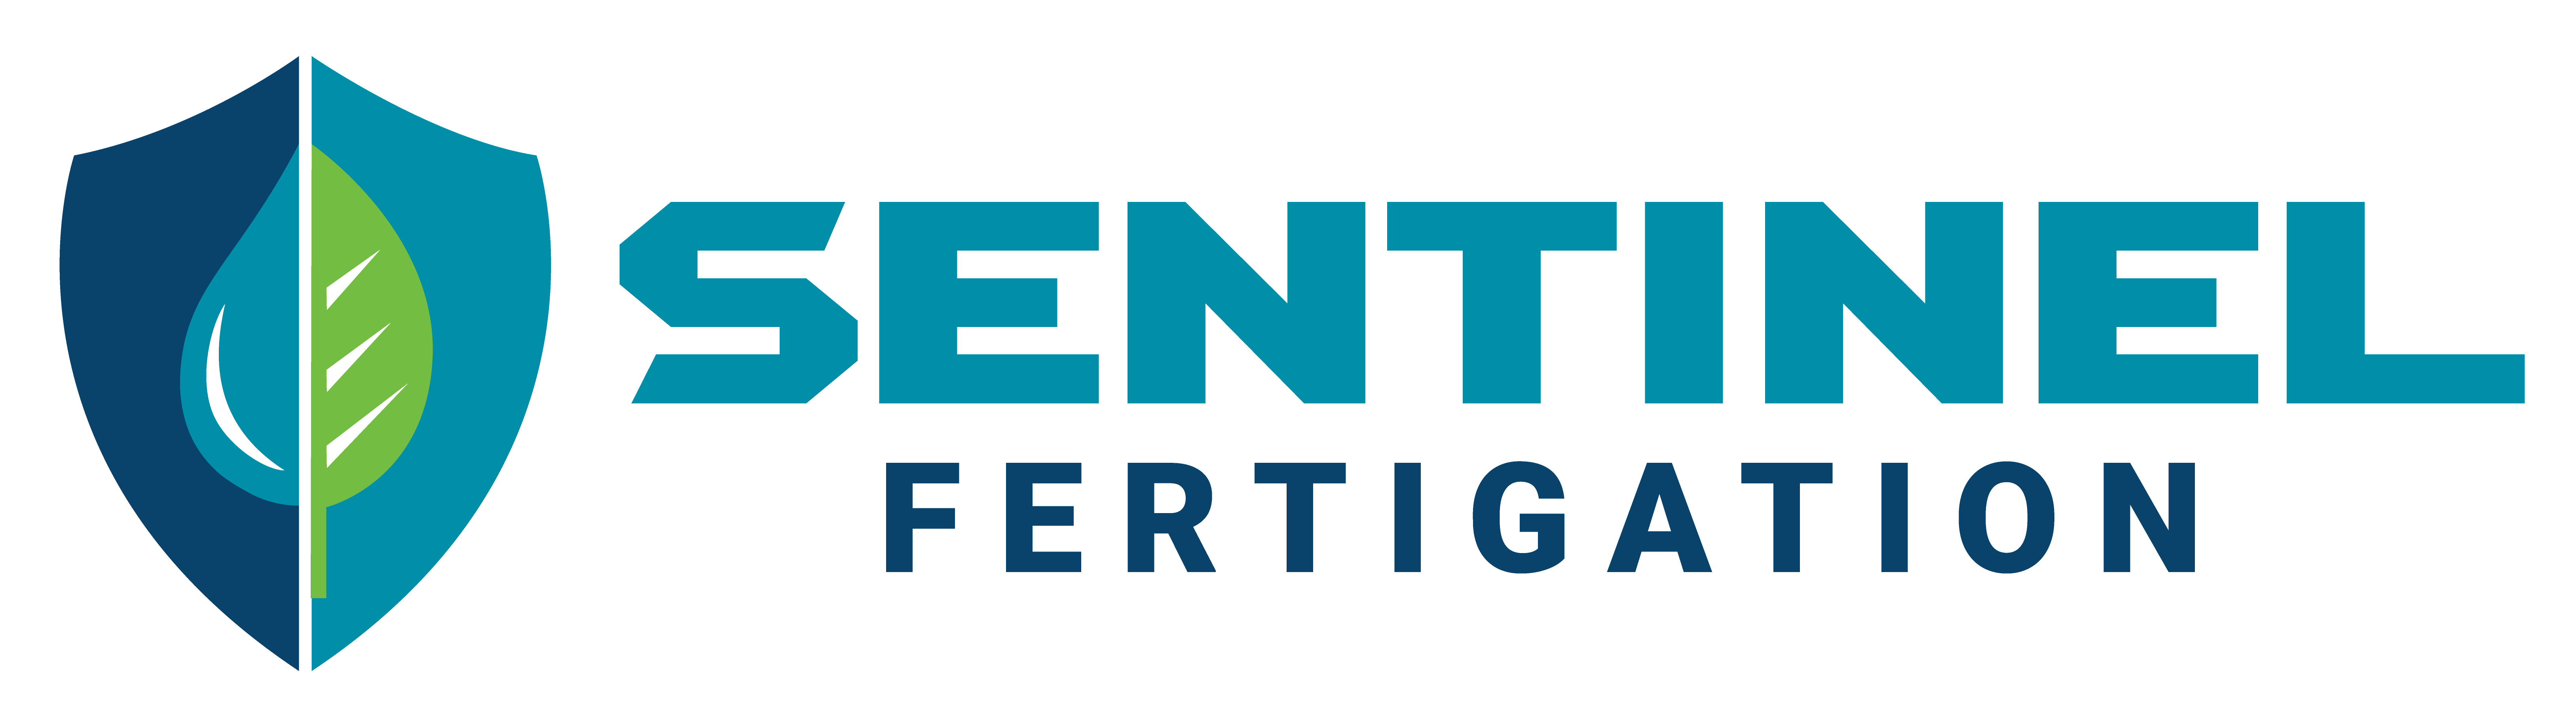 Sentinel Fertigation Technologies logo